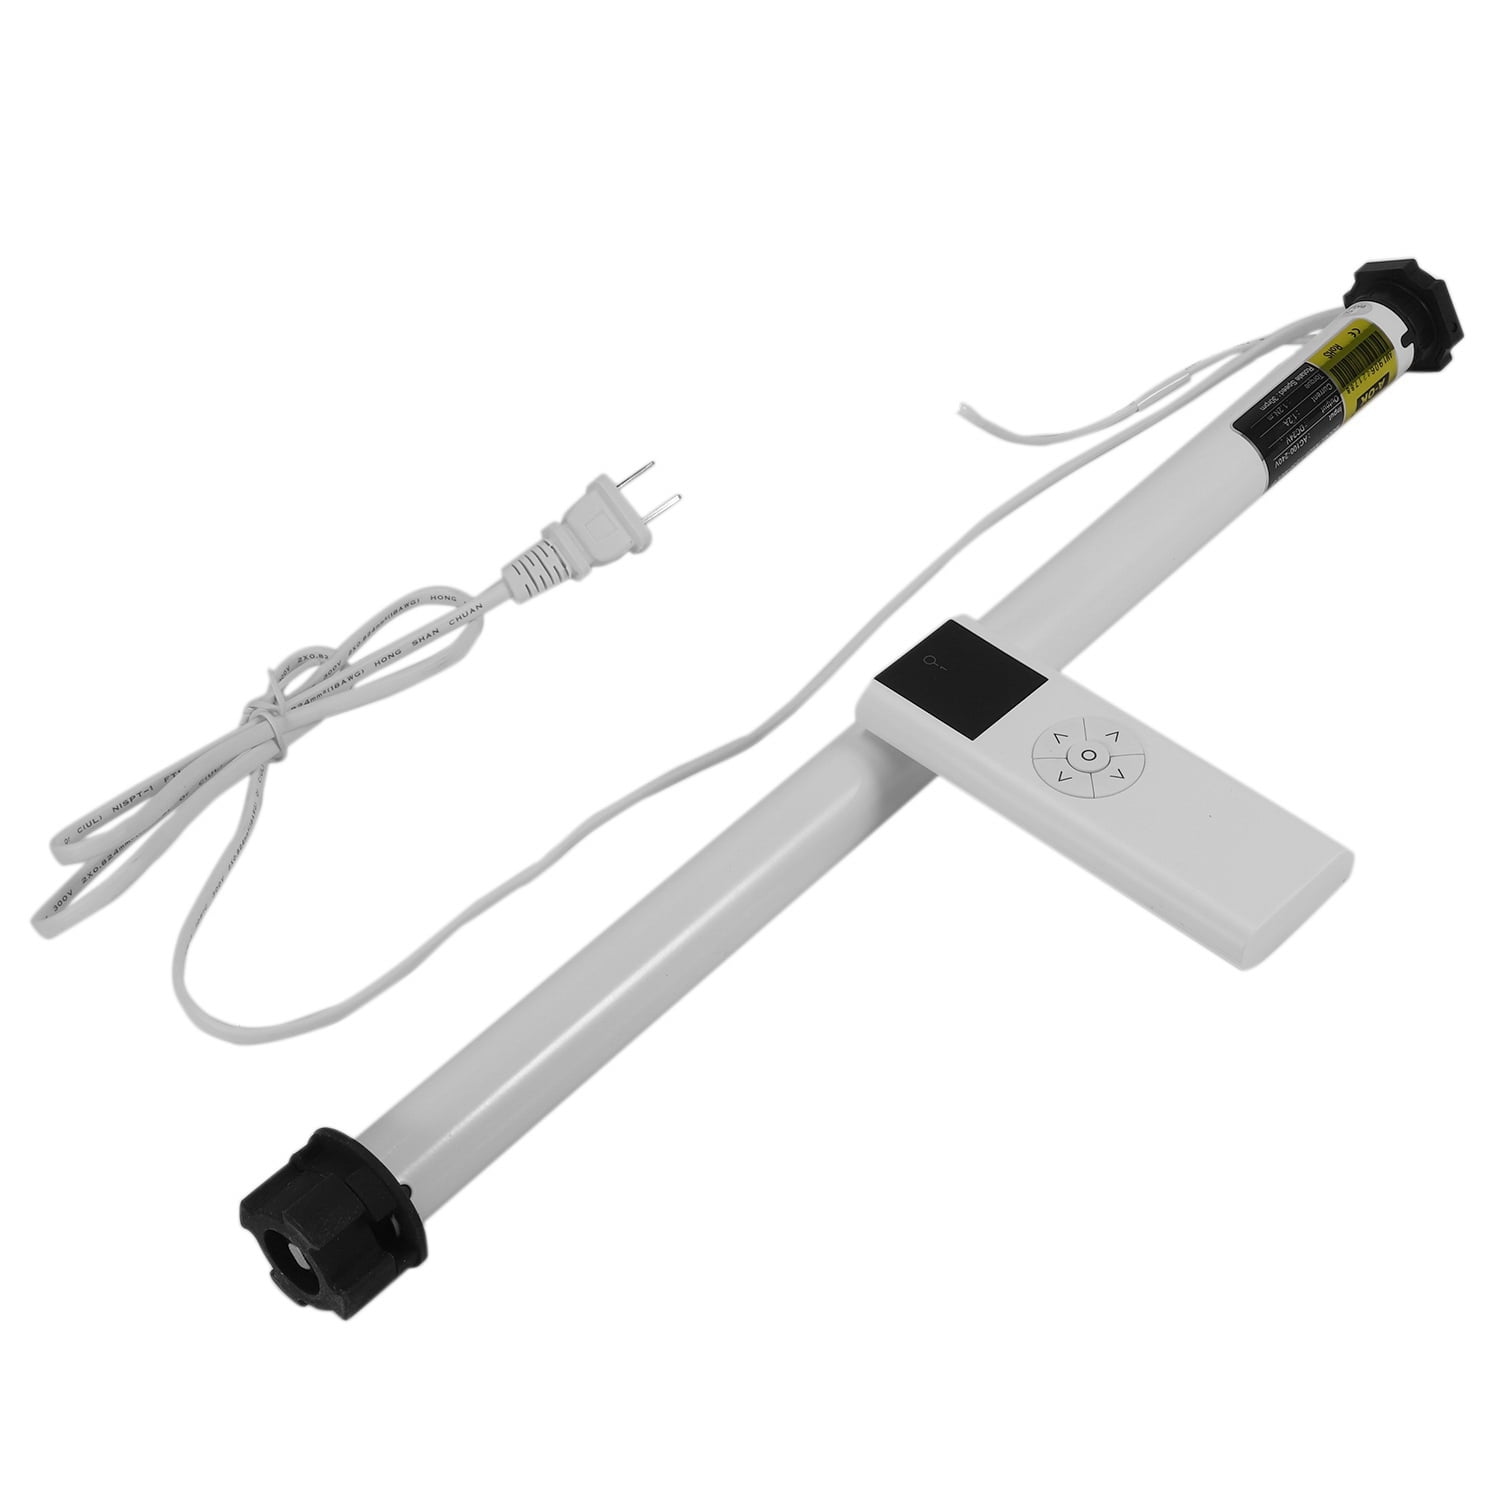 Ac100-240 diy electric roller blind/shade tubular motor kit & remote controller 